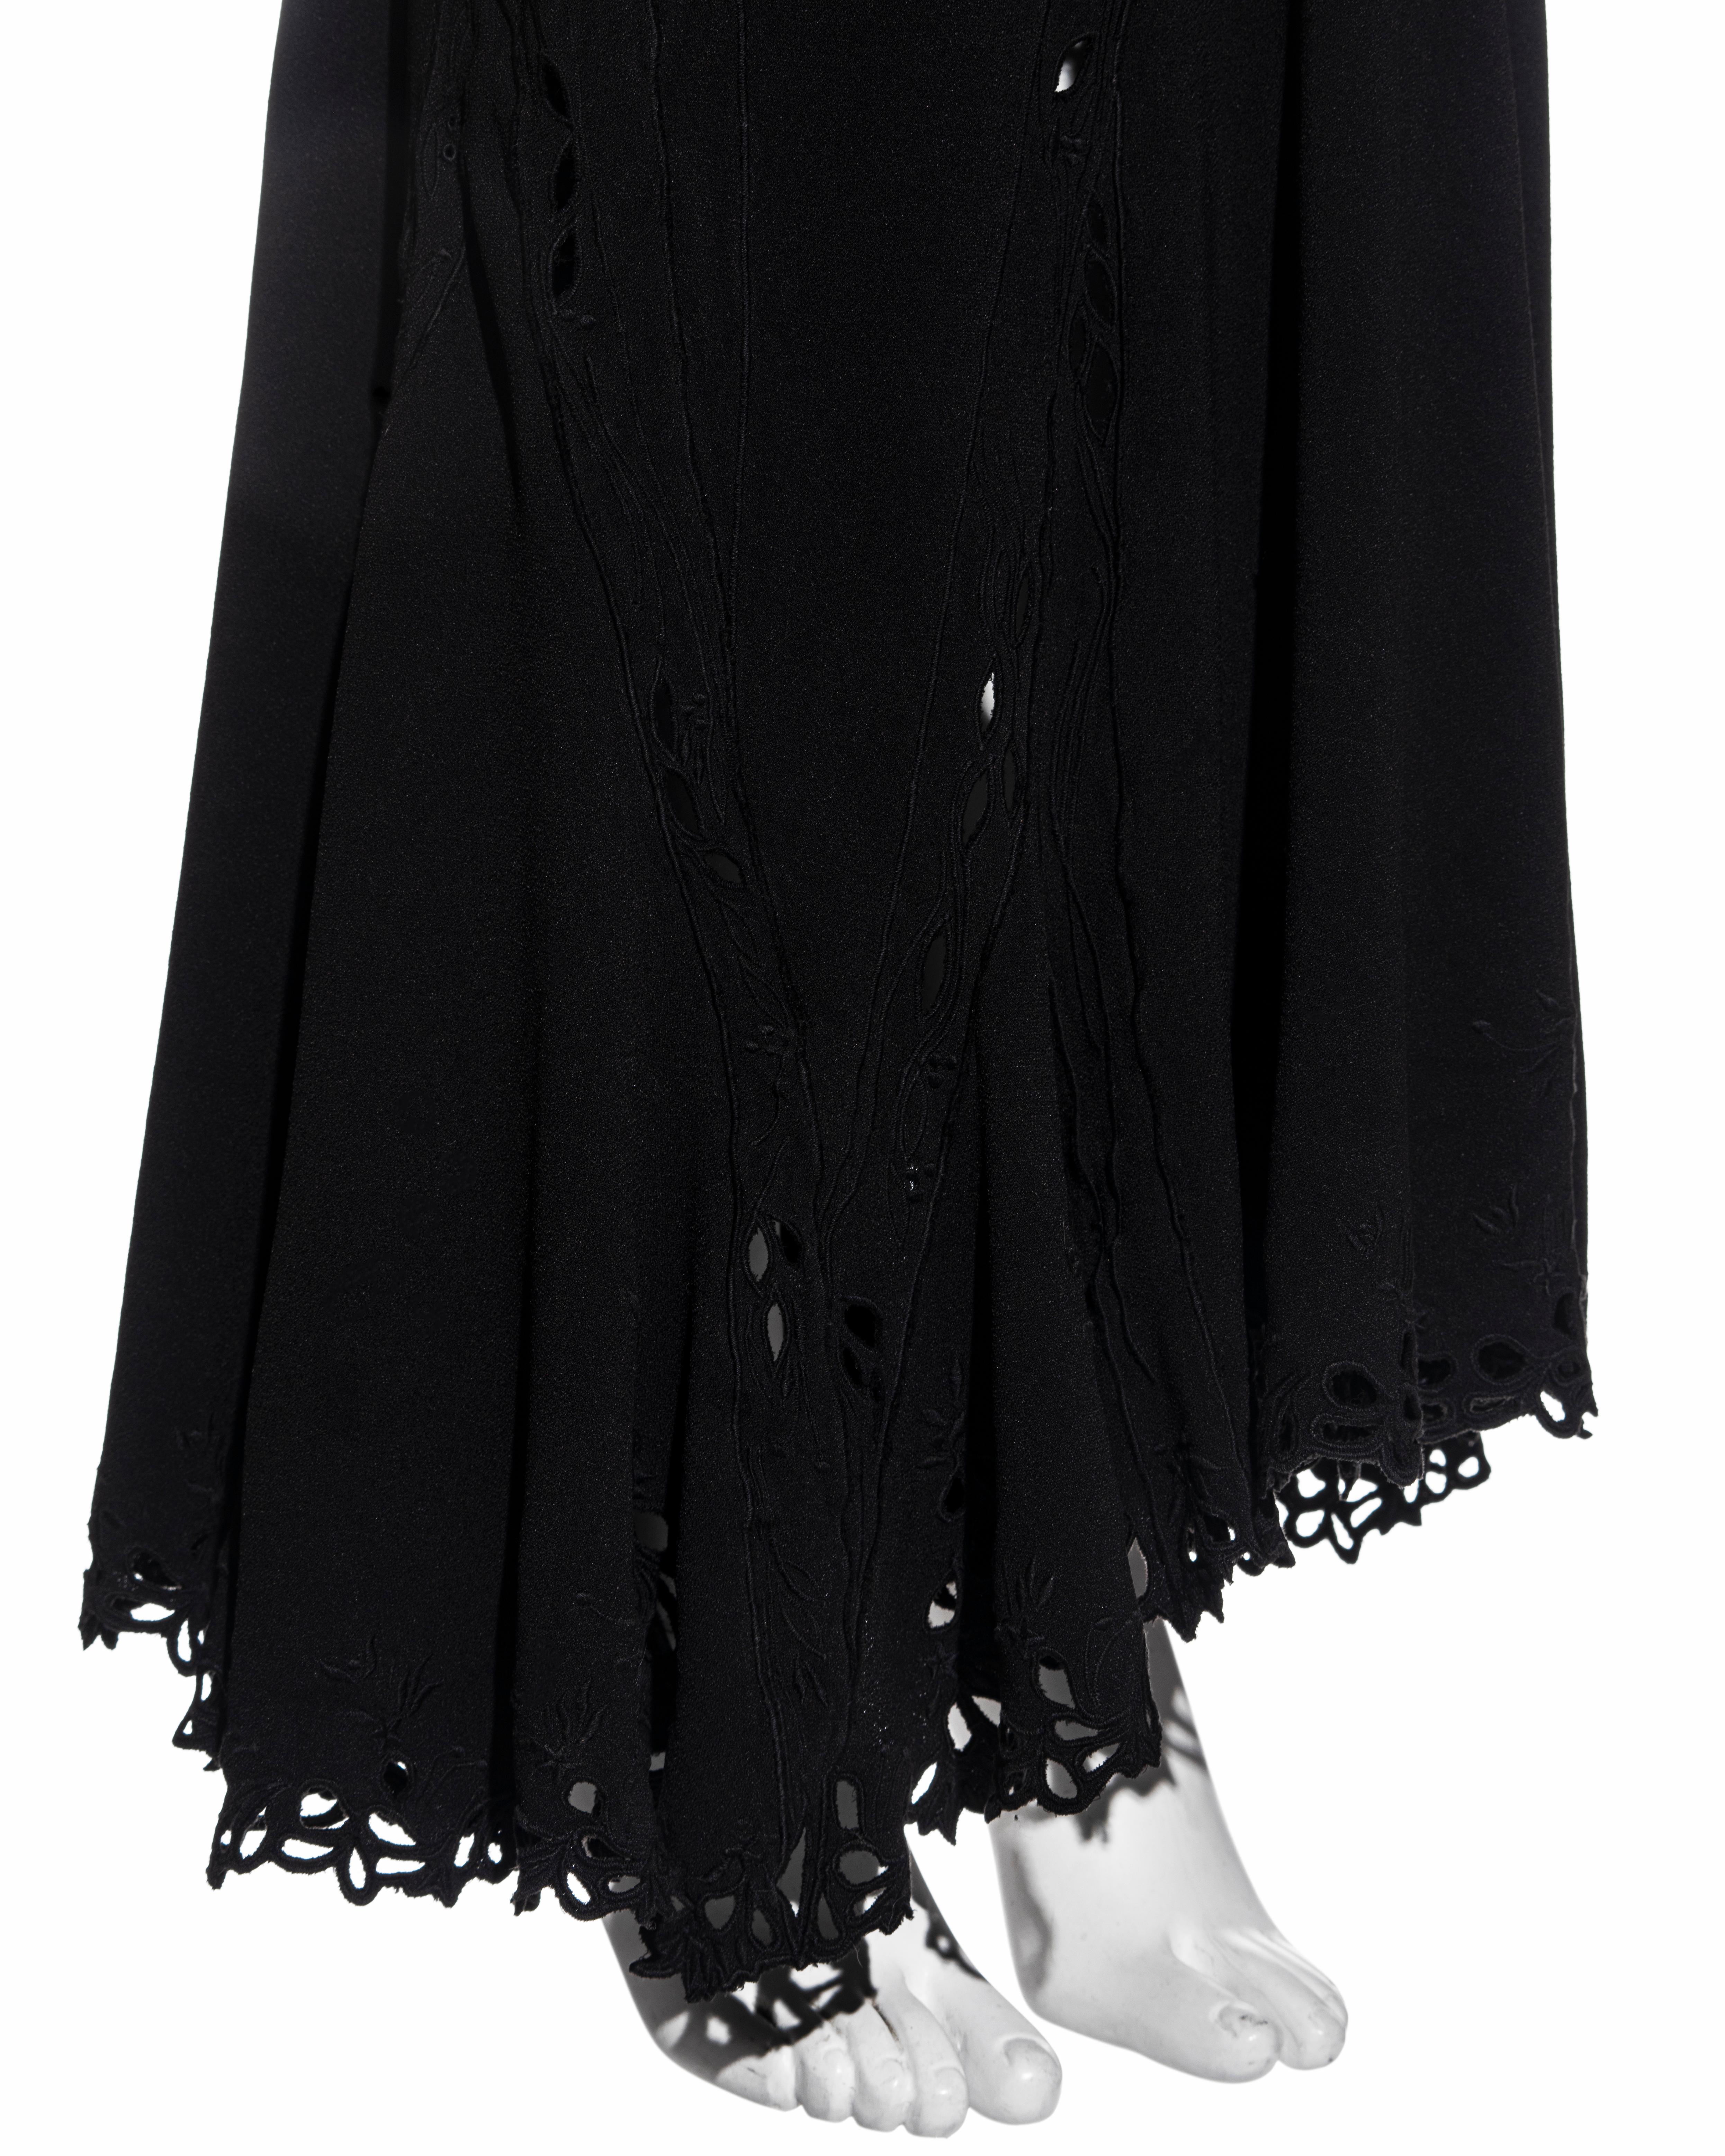 John Galliano black silk crepe cutwork evening dress with chain straps, ss 1996 9